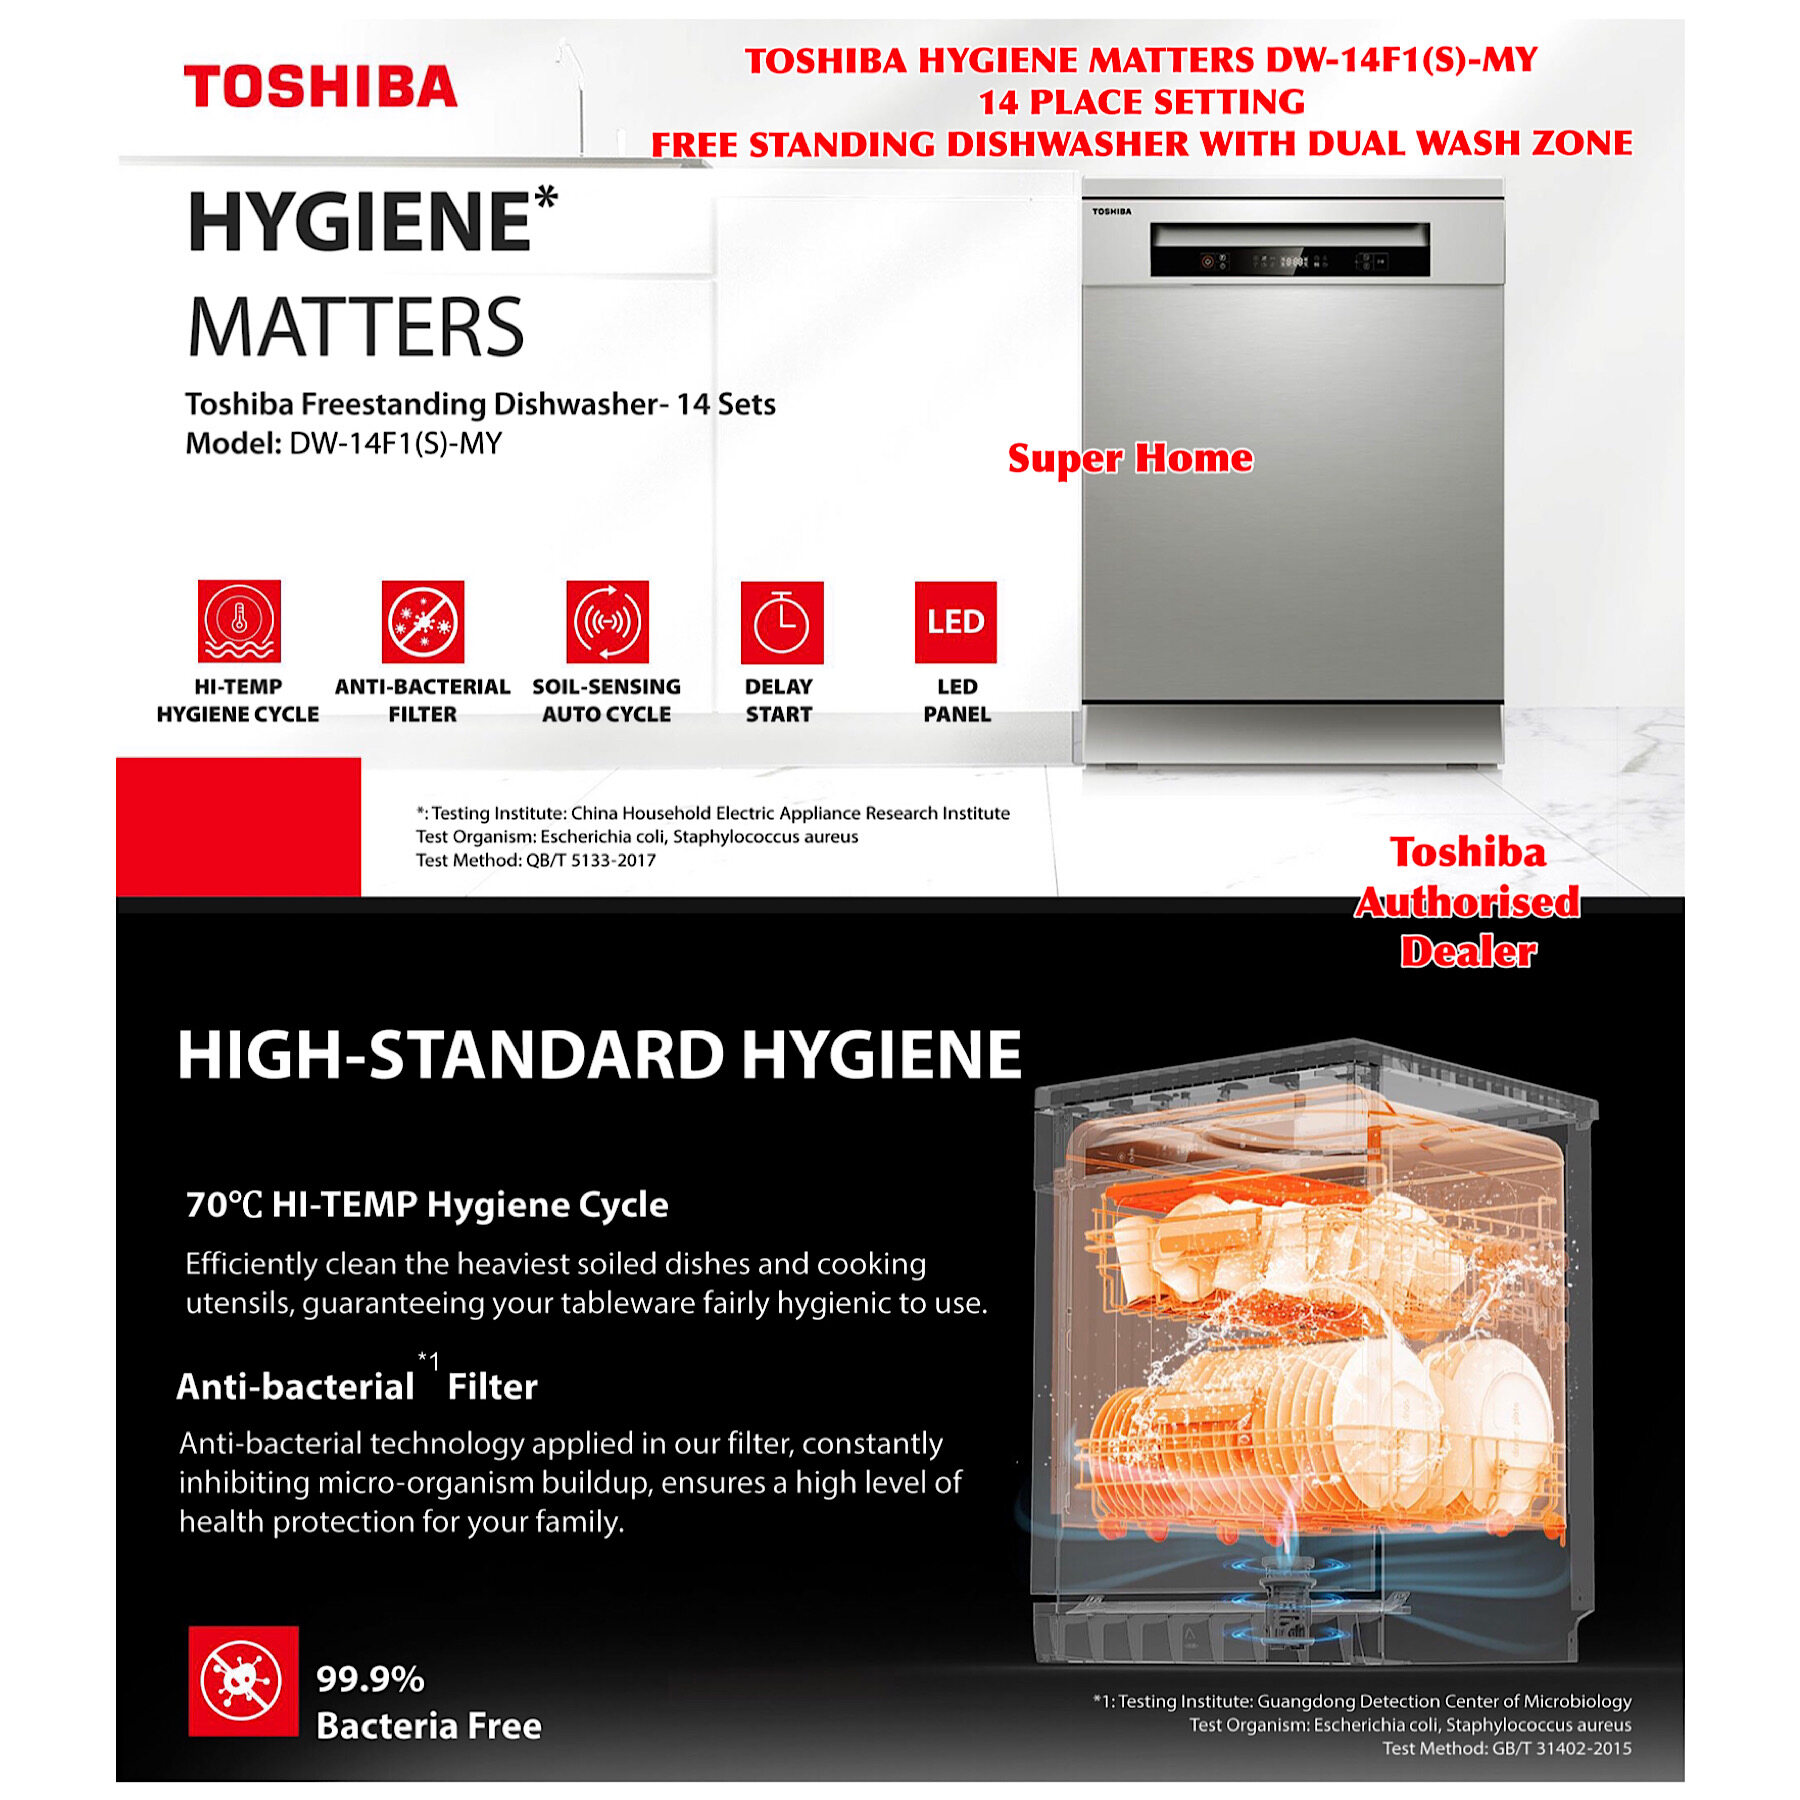 Toshiba Dish Washer DW-14F1(S)-MY HYGIENE Matters 14 Set Self-Cleaning Free standing Dishwasher Machine 洗碗机 - Dual Wash Zone 洗碗机